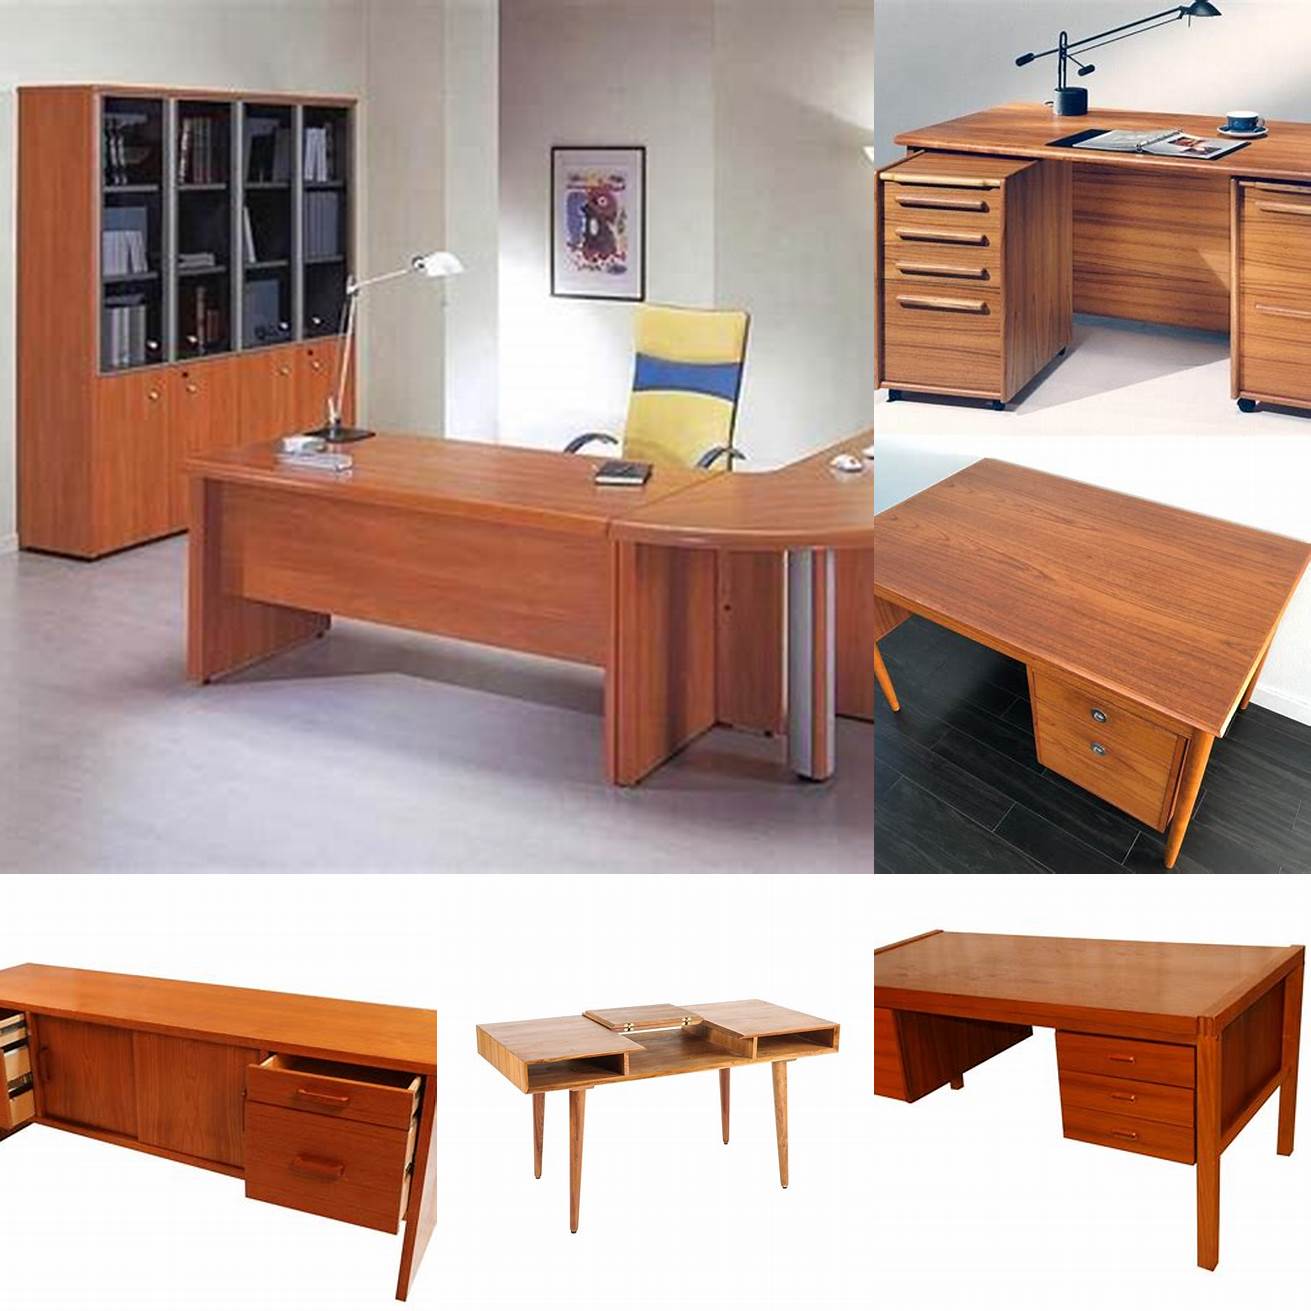 Teak furniture in an office